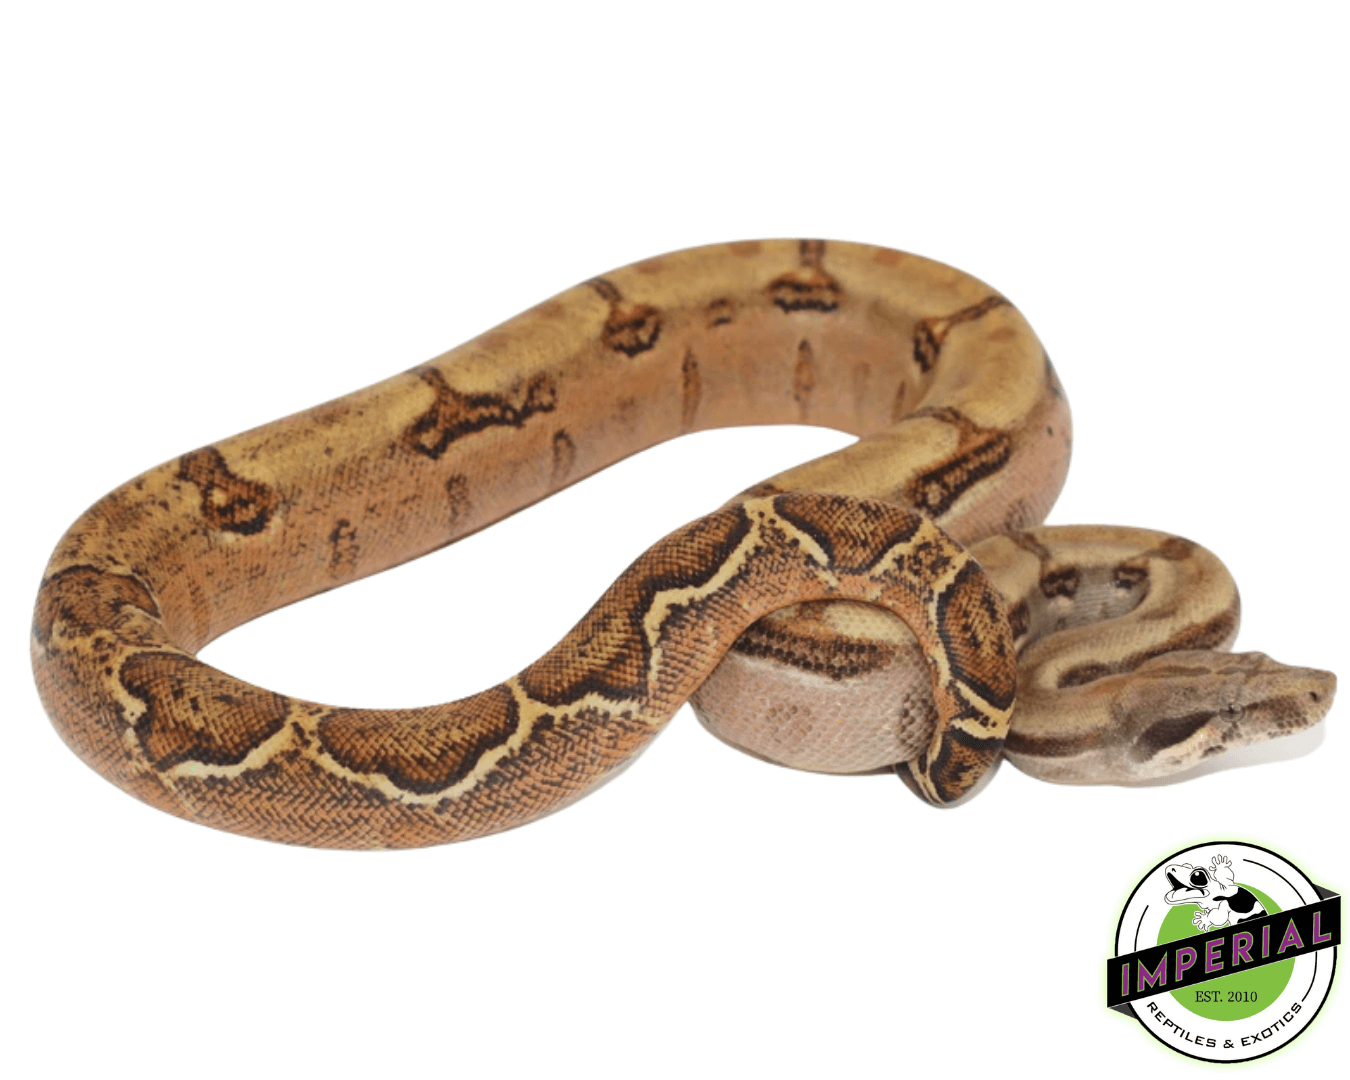 hypo hog island boa constrictor for sale, buy reptiles online